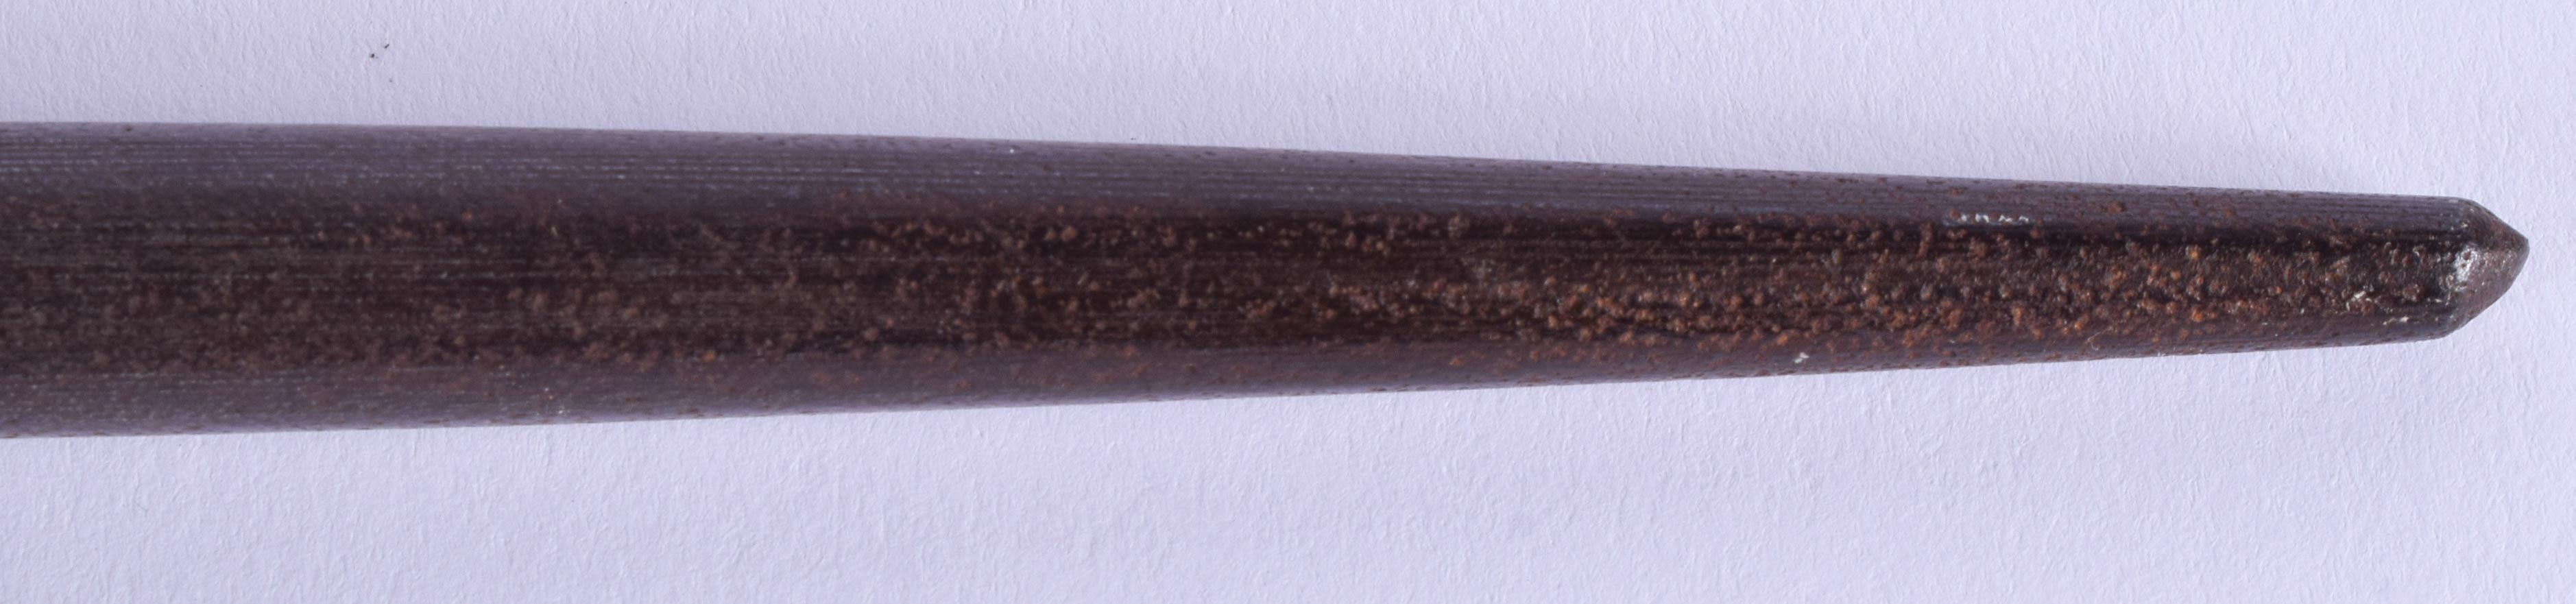 A 19TH CENTURY RHINOCEROS HORN HANDLED SHARPENING STEEL. 35 cm long. - Image 3 of 3